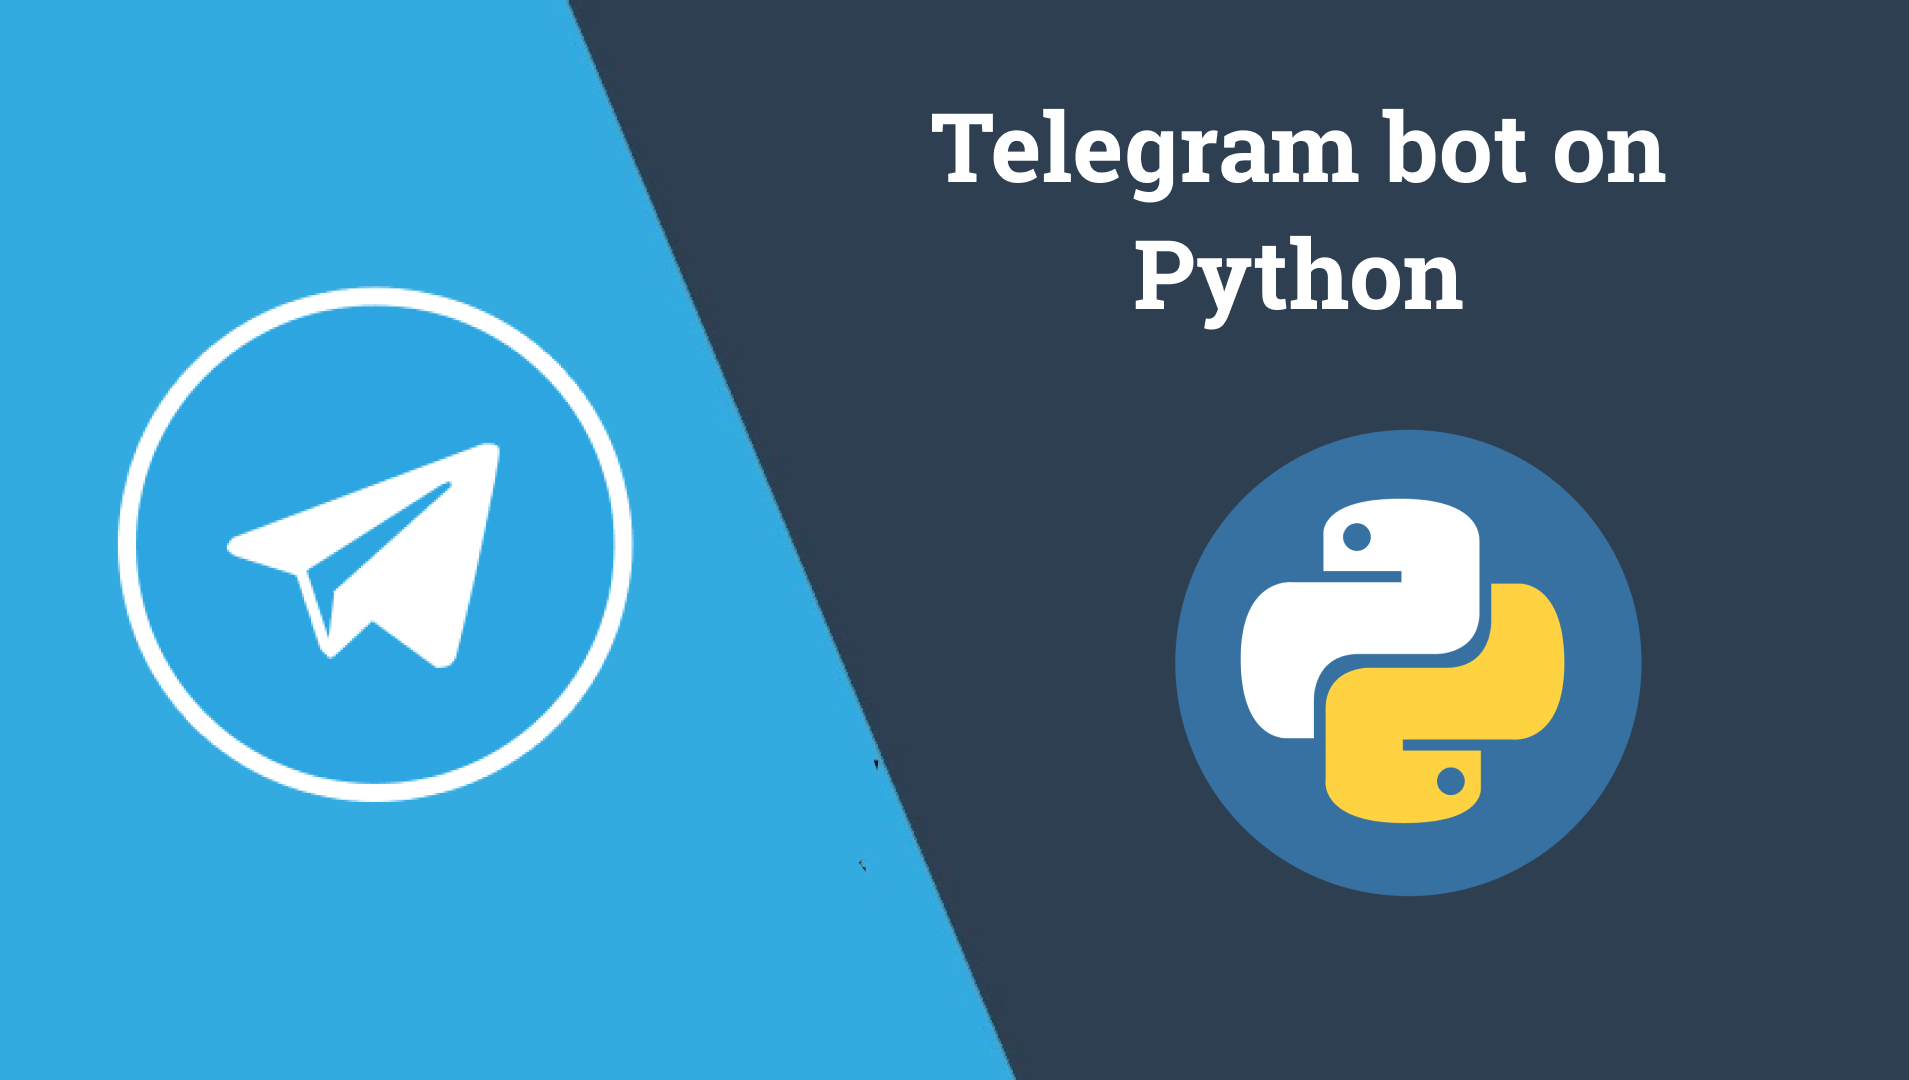 Готовые боты на python. Телеграм бот. Бот на Пайтон. Телеграмм бот на Python. Телеграмм боты на Пайтон.